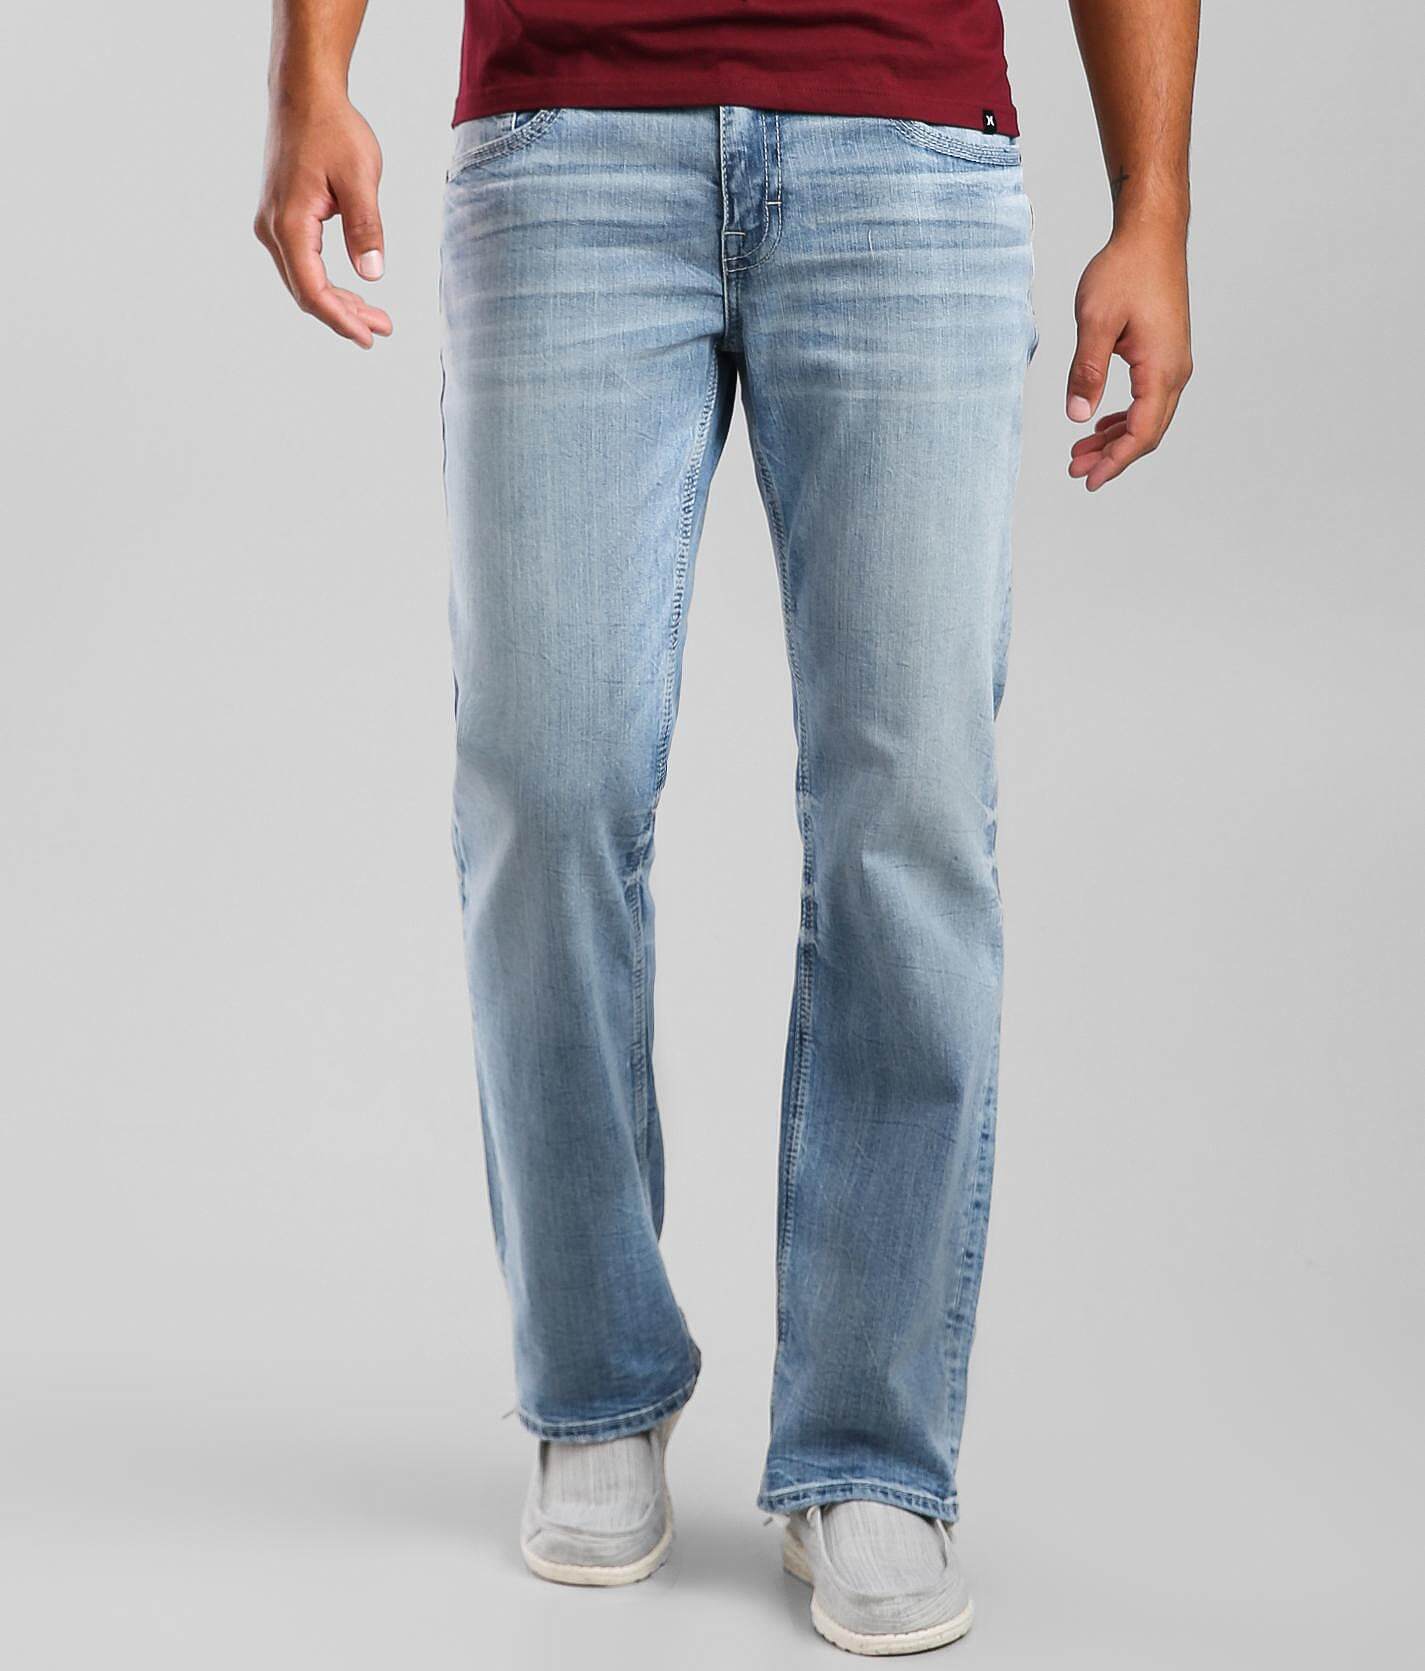 bke marshall jeans